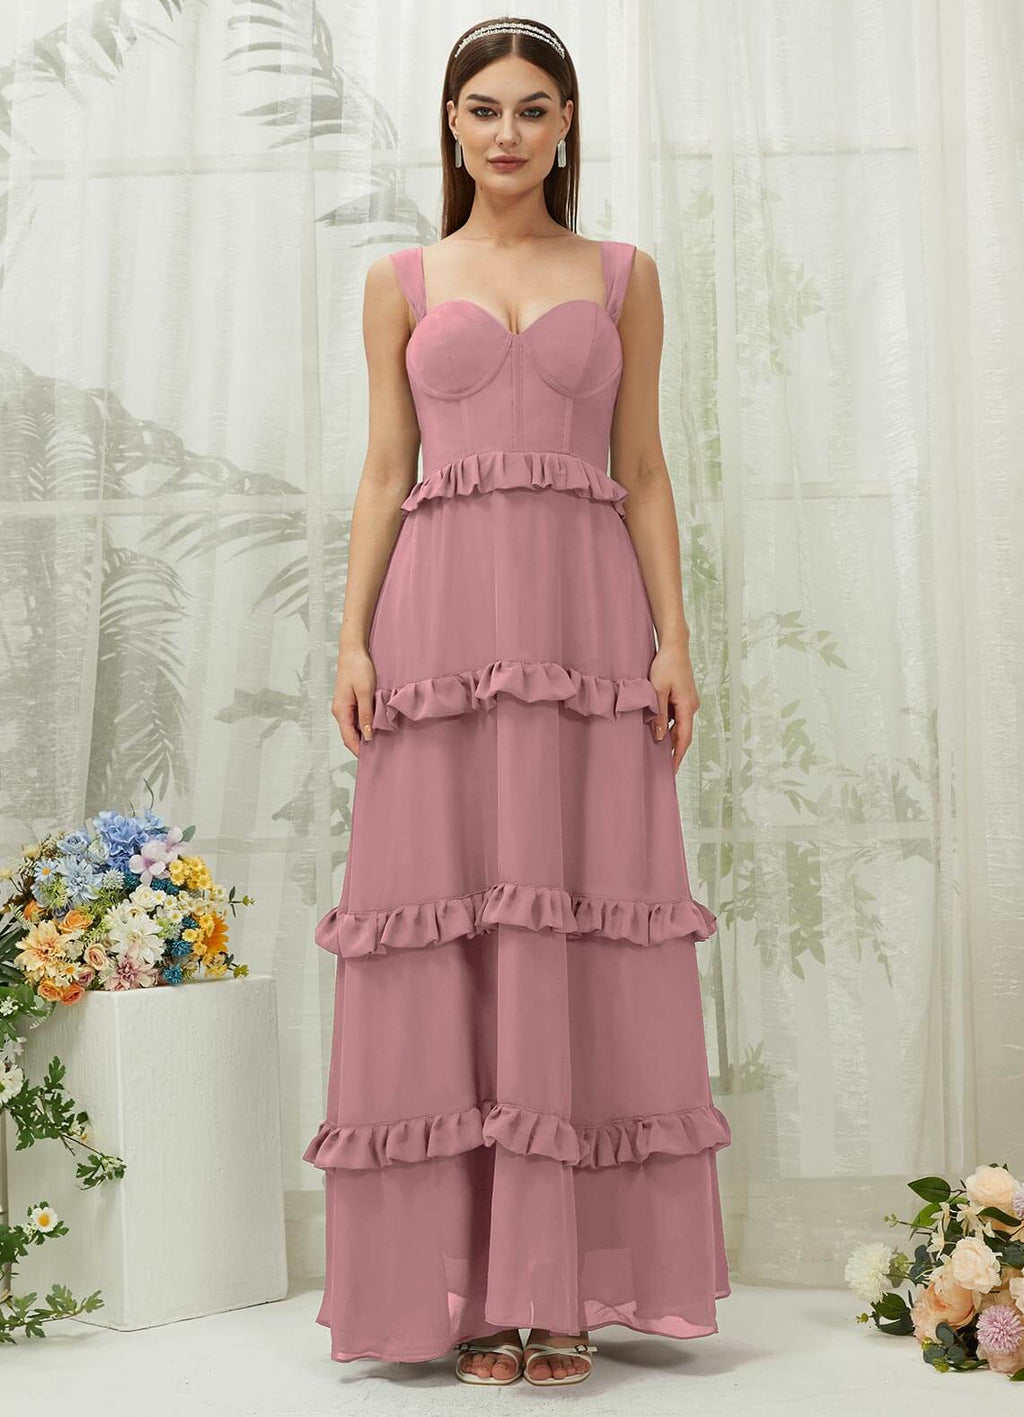 NZ Bridal Vintage Sweetheart Neck Chiffon Floor Length Bridesmaid Dress R3701 Sloane a